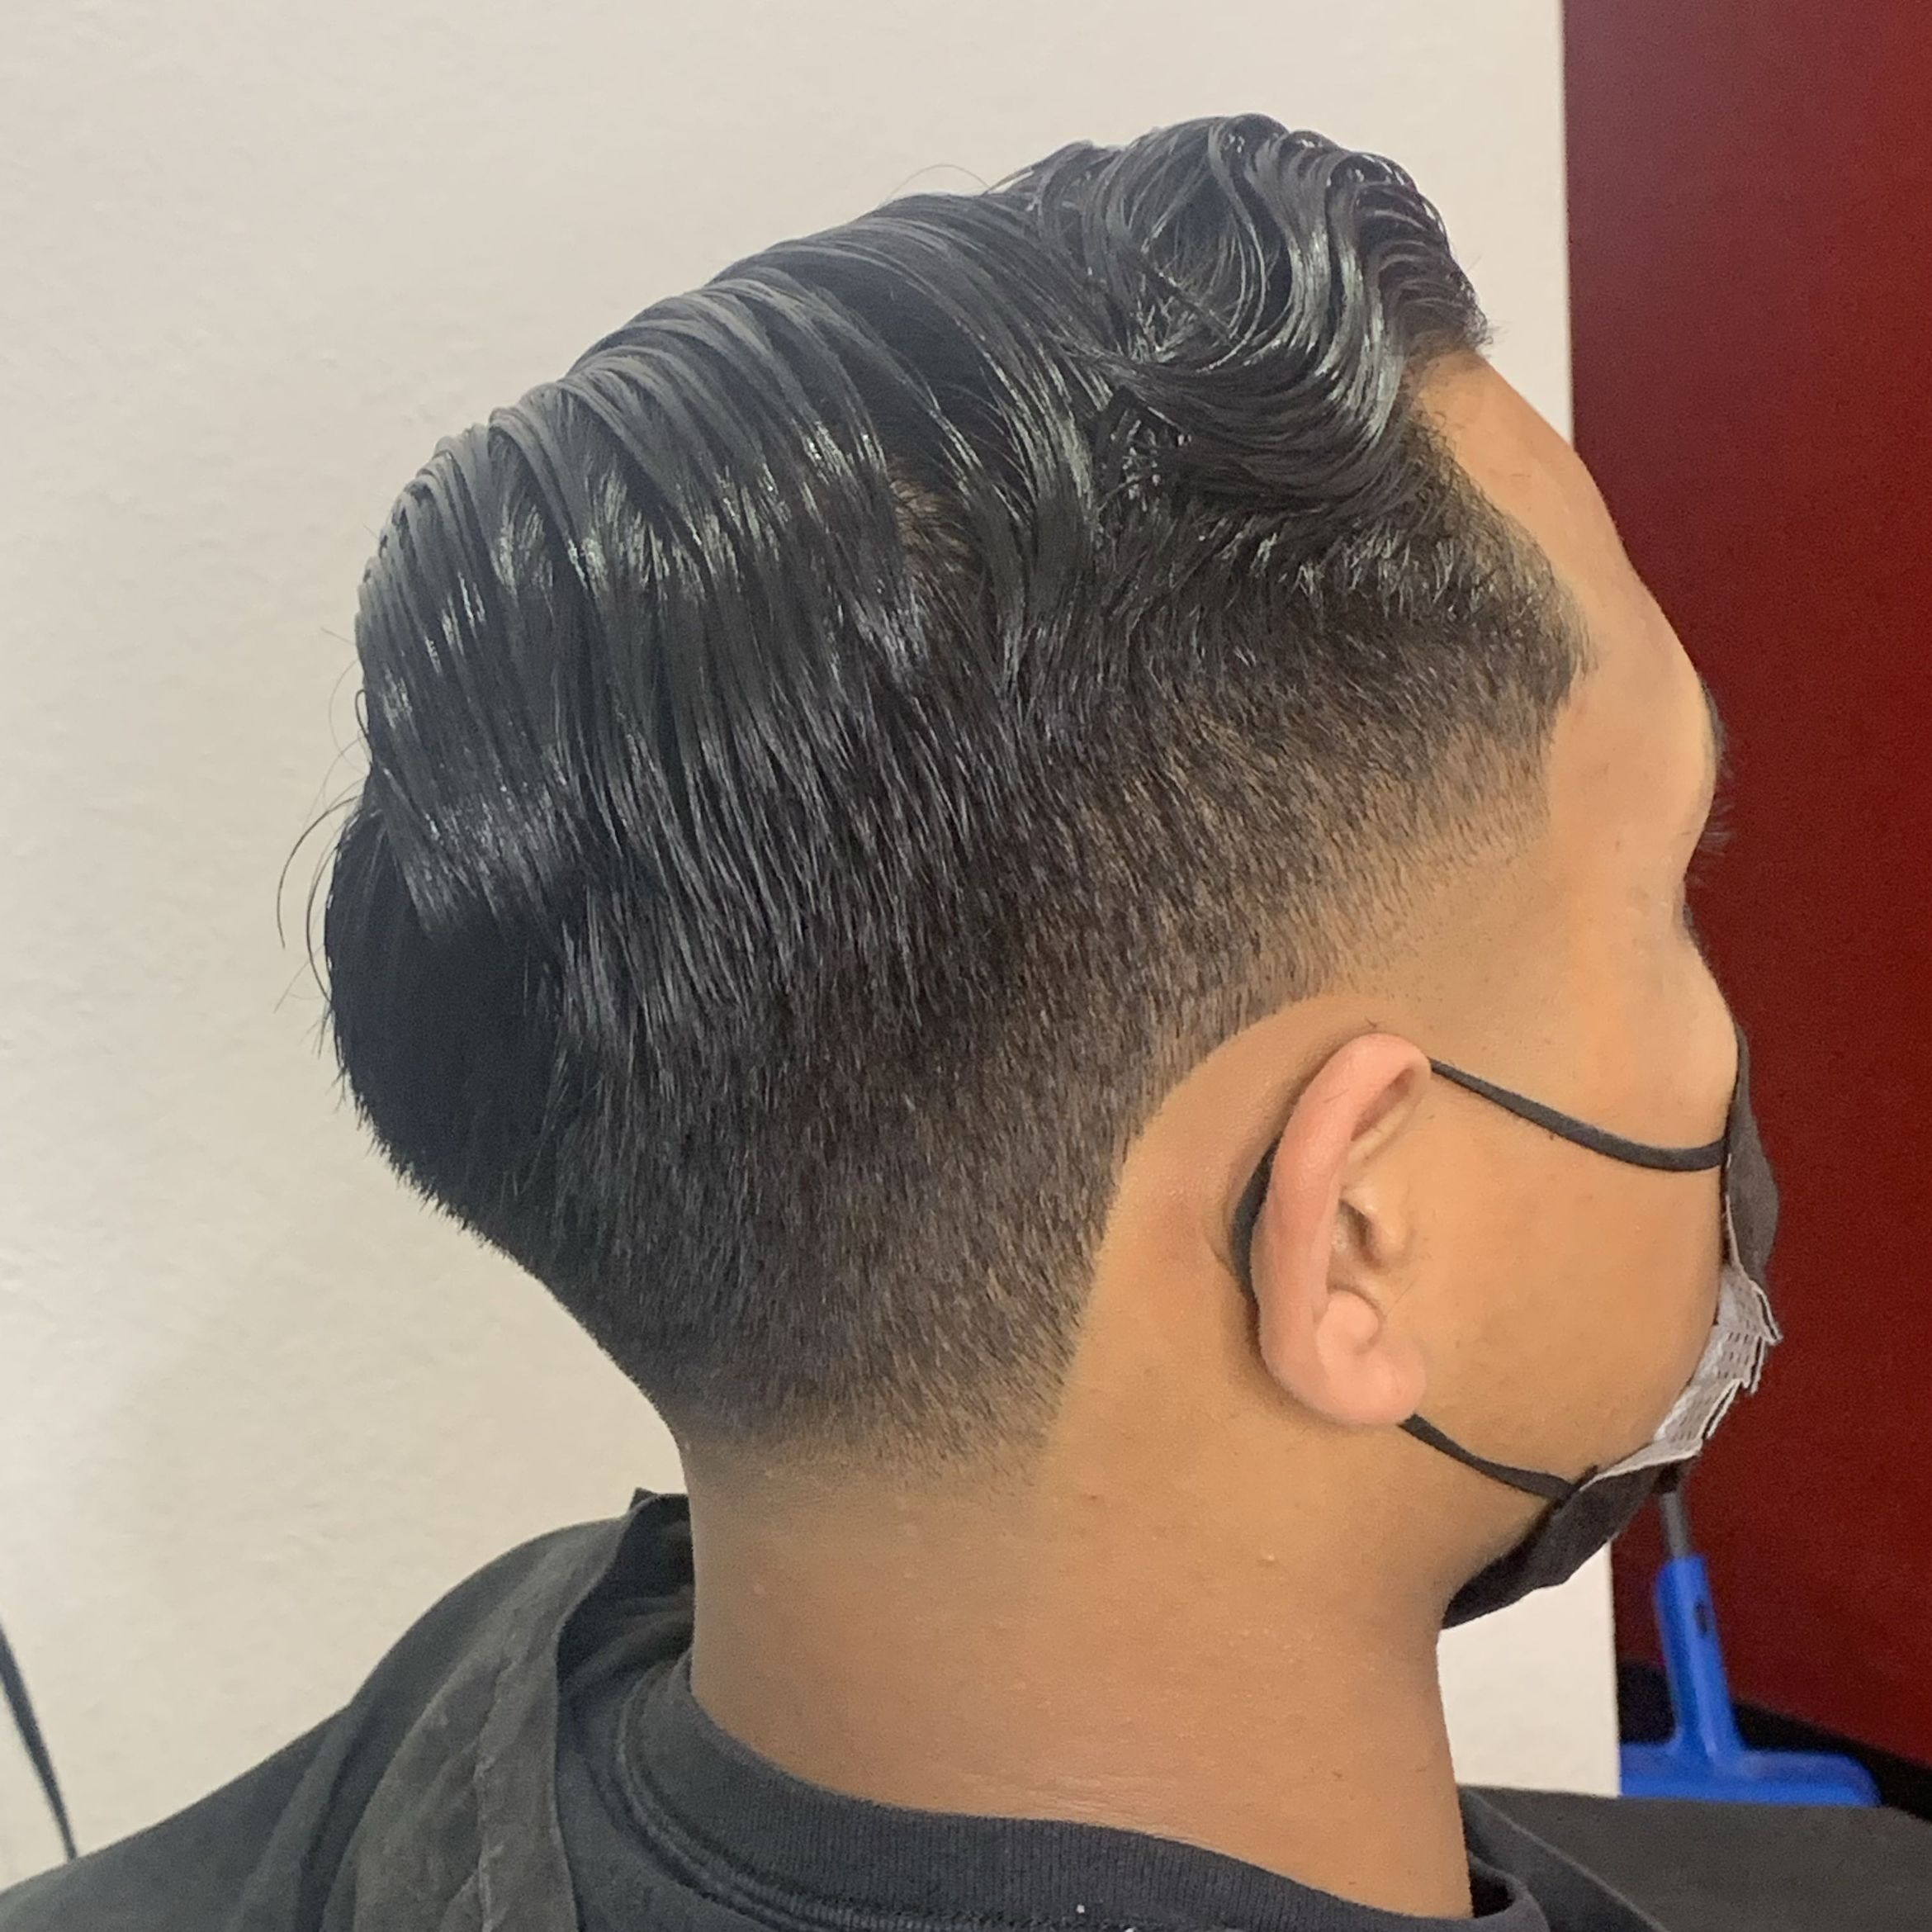 Barber Jordan Patel, 4125 West Lane, Stockton, 95204